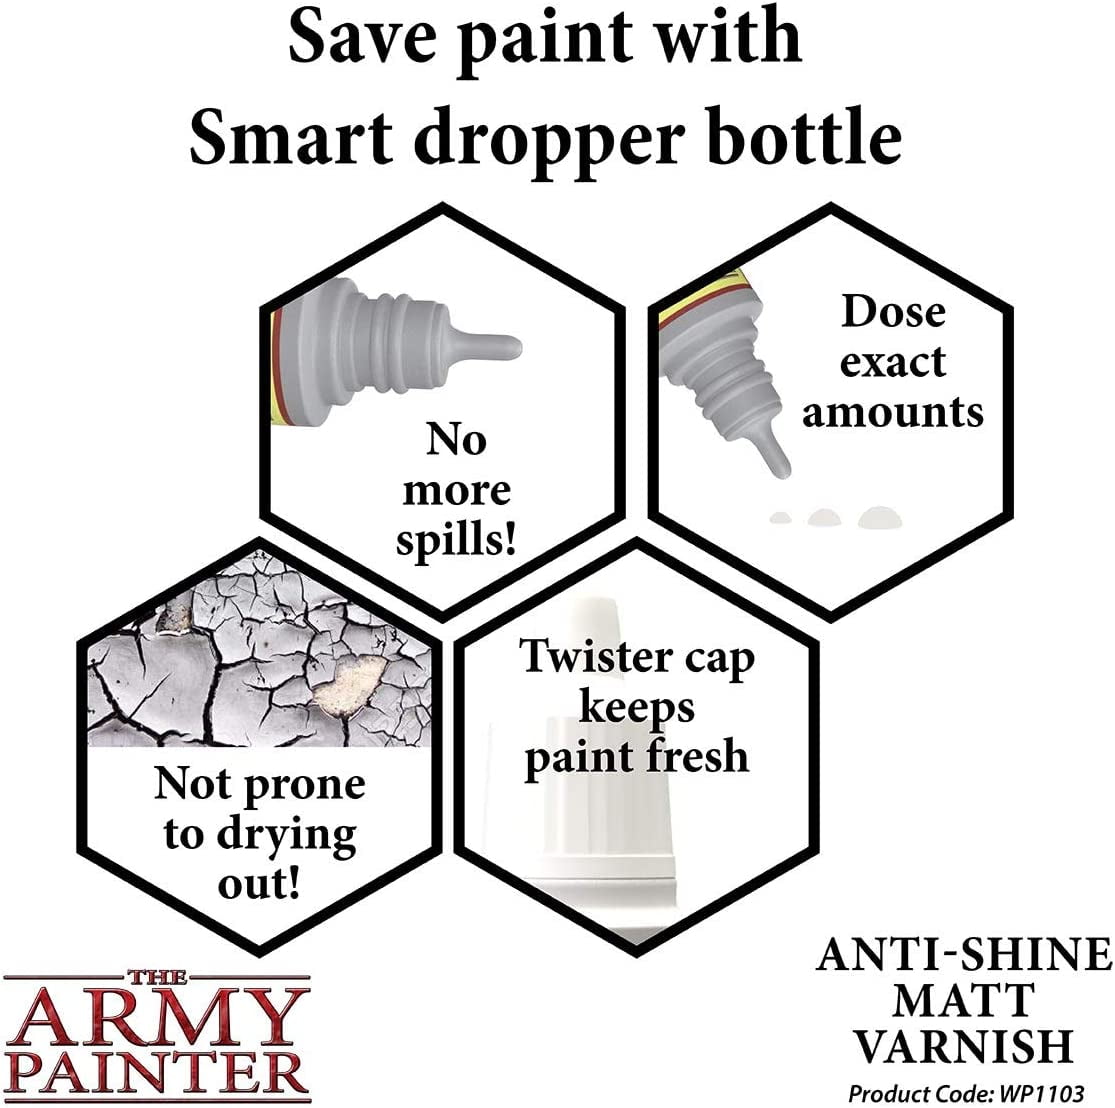 Army Painter - Peinture Spray - Sous Couche - Anti-Shine - Matt Varnish  (400ml)